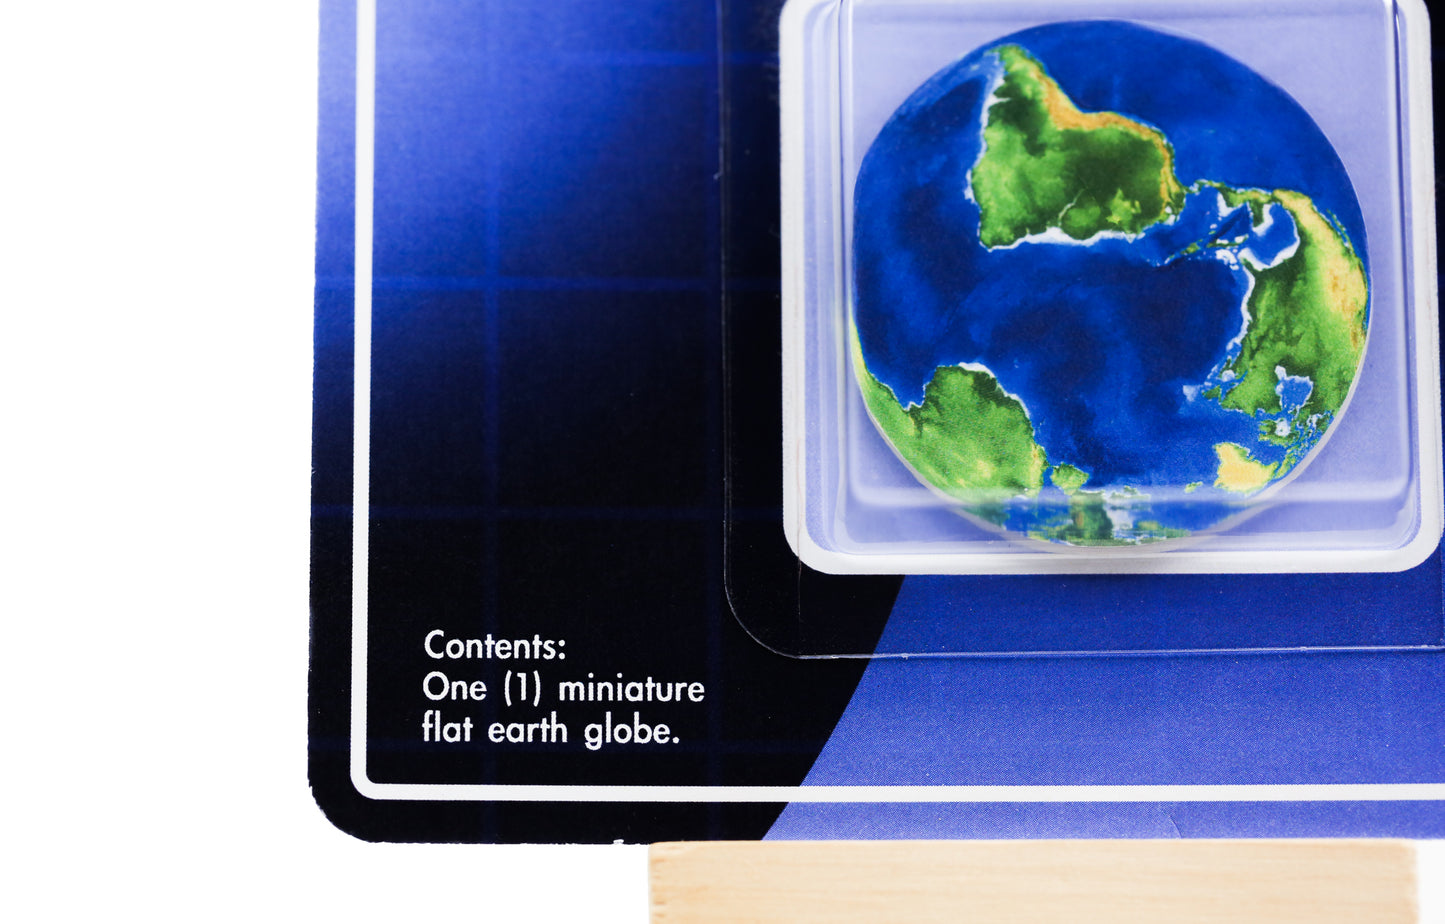 Death By Toys "Flat Earth" Mini Globe